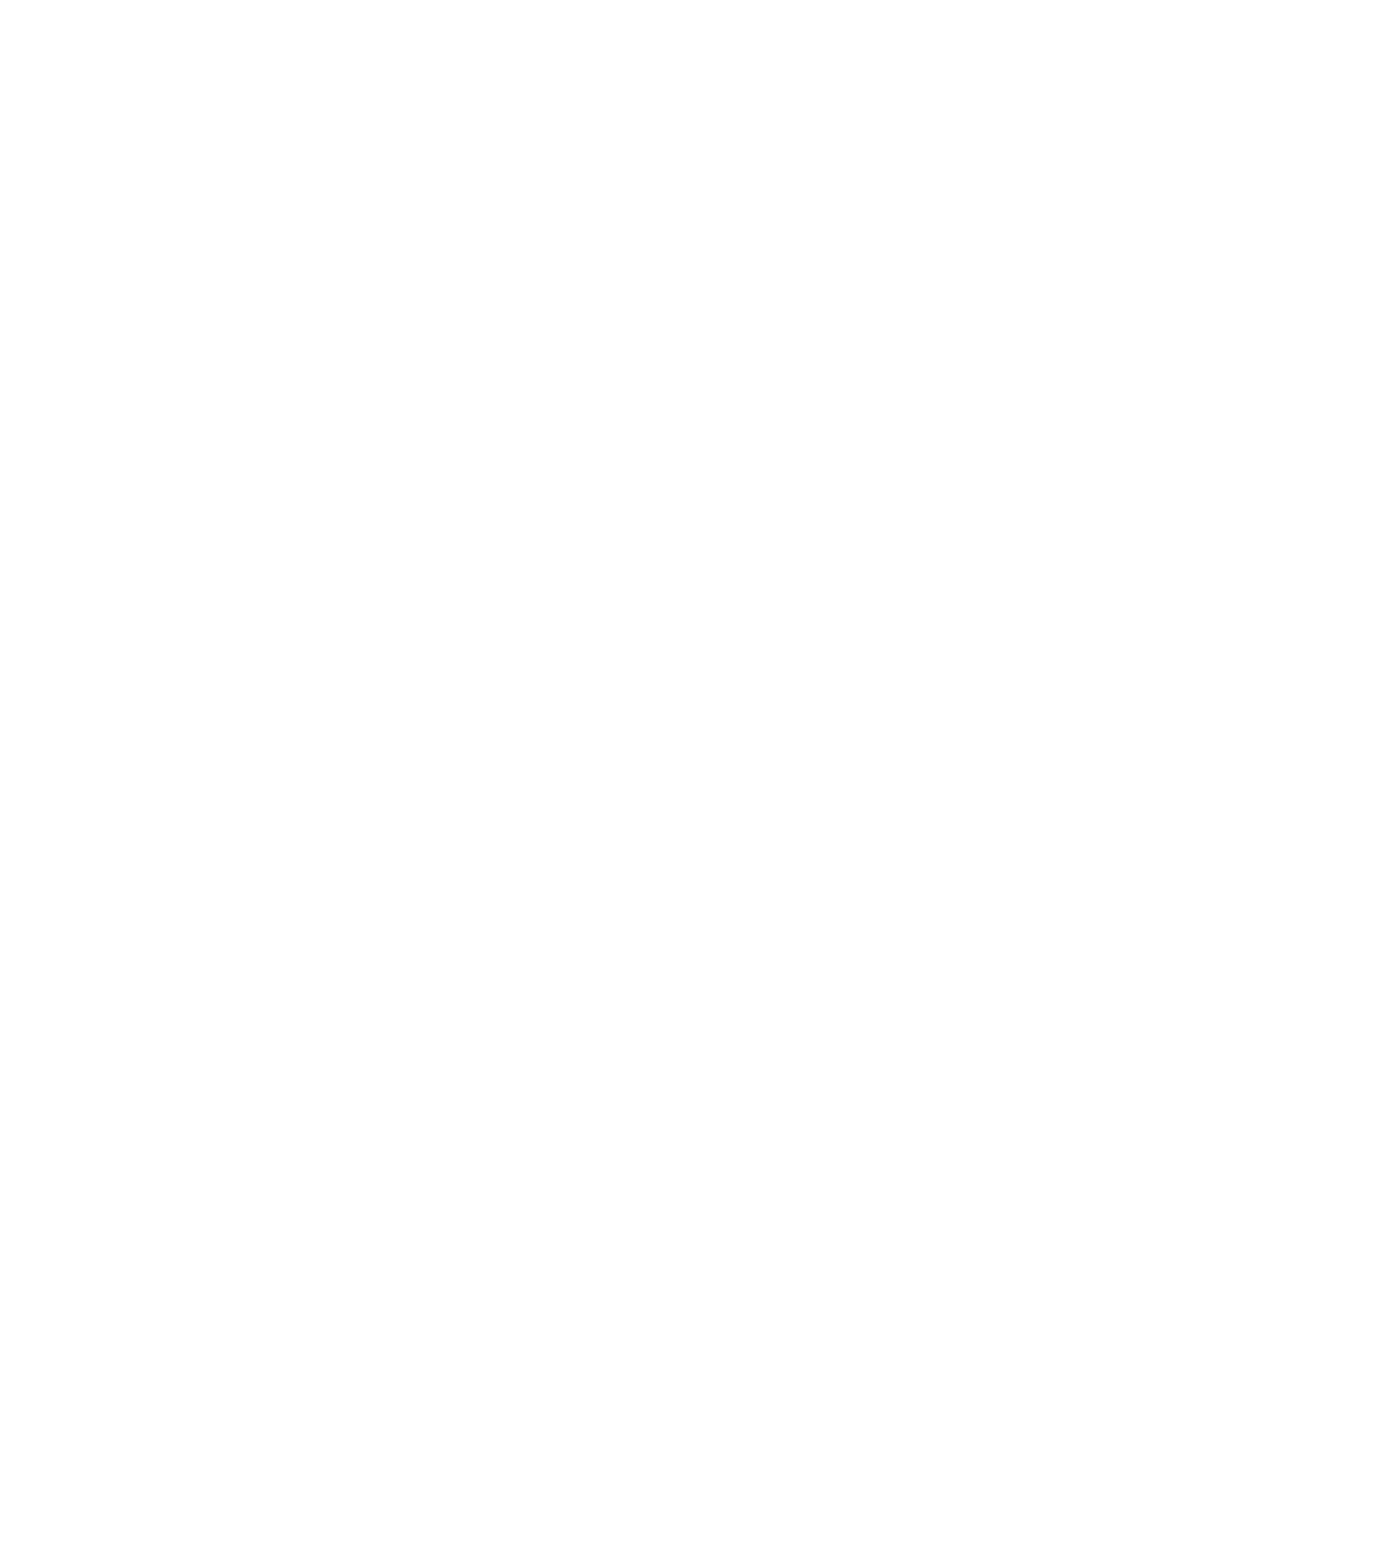 Gästehaus Ploch